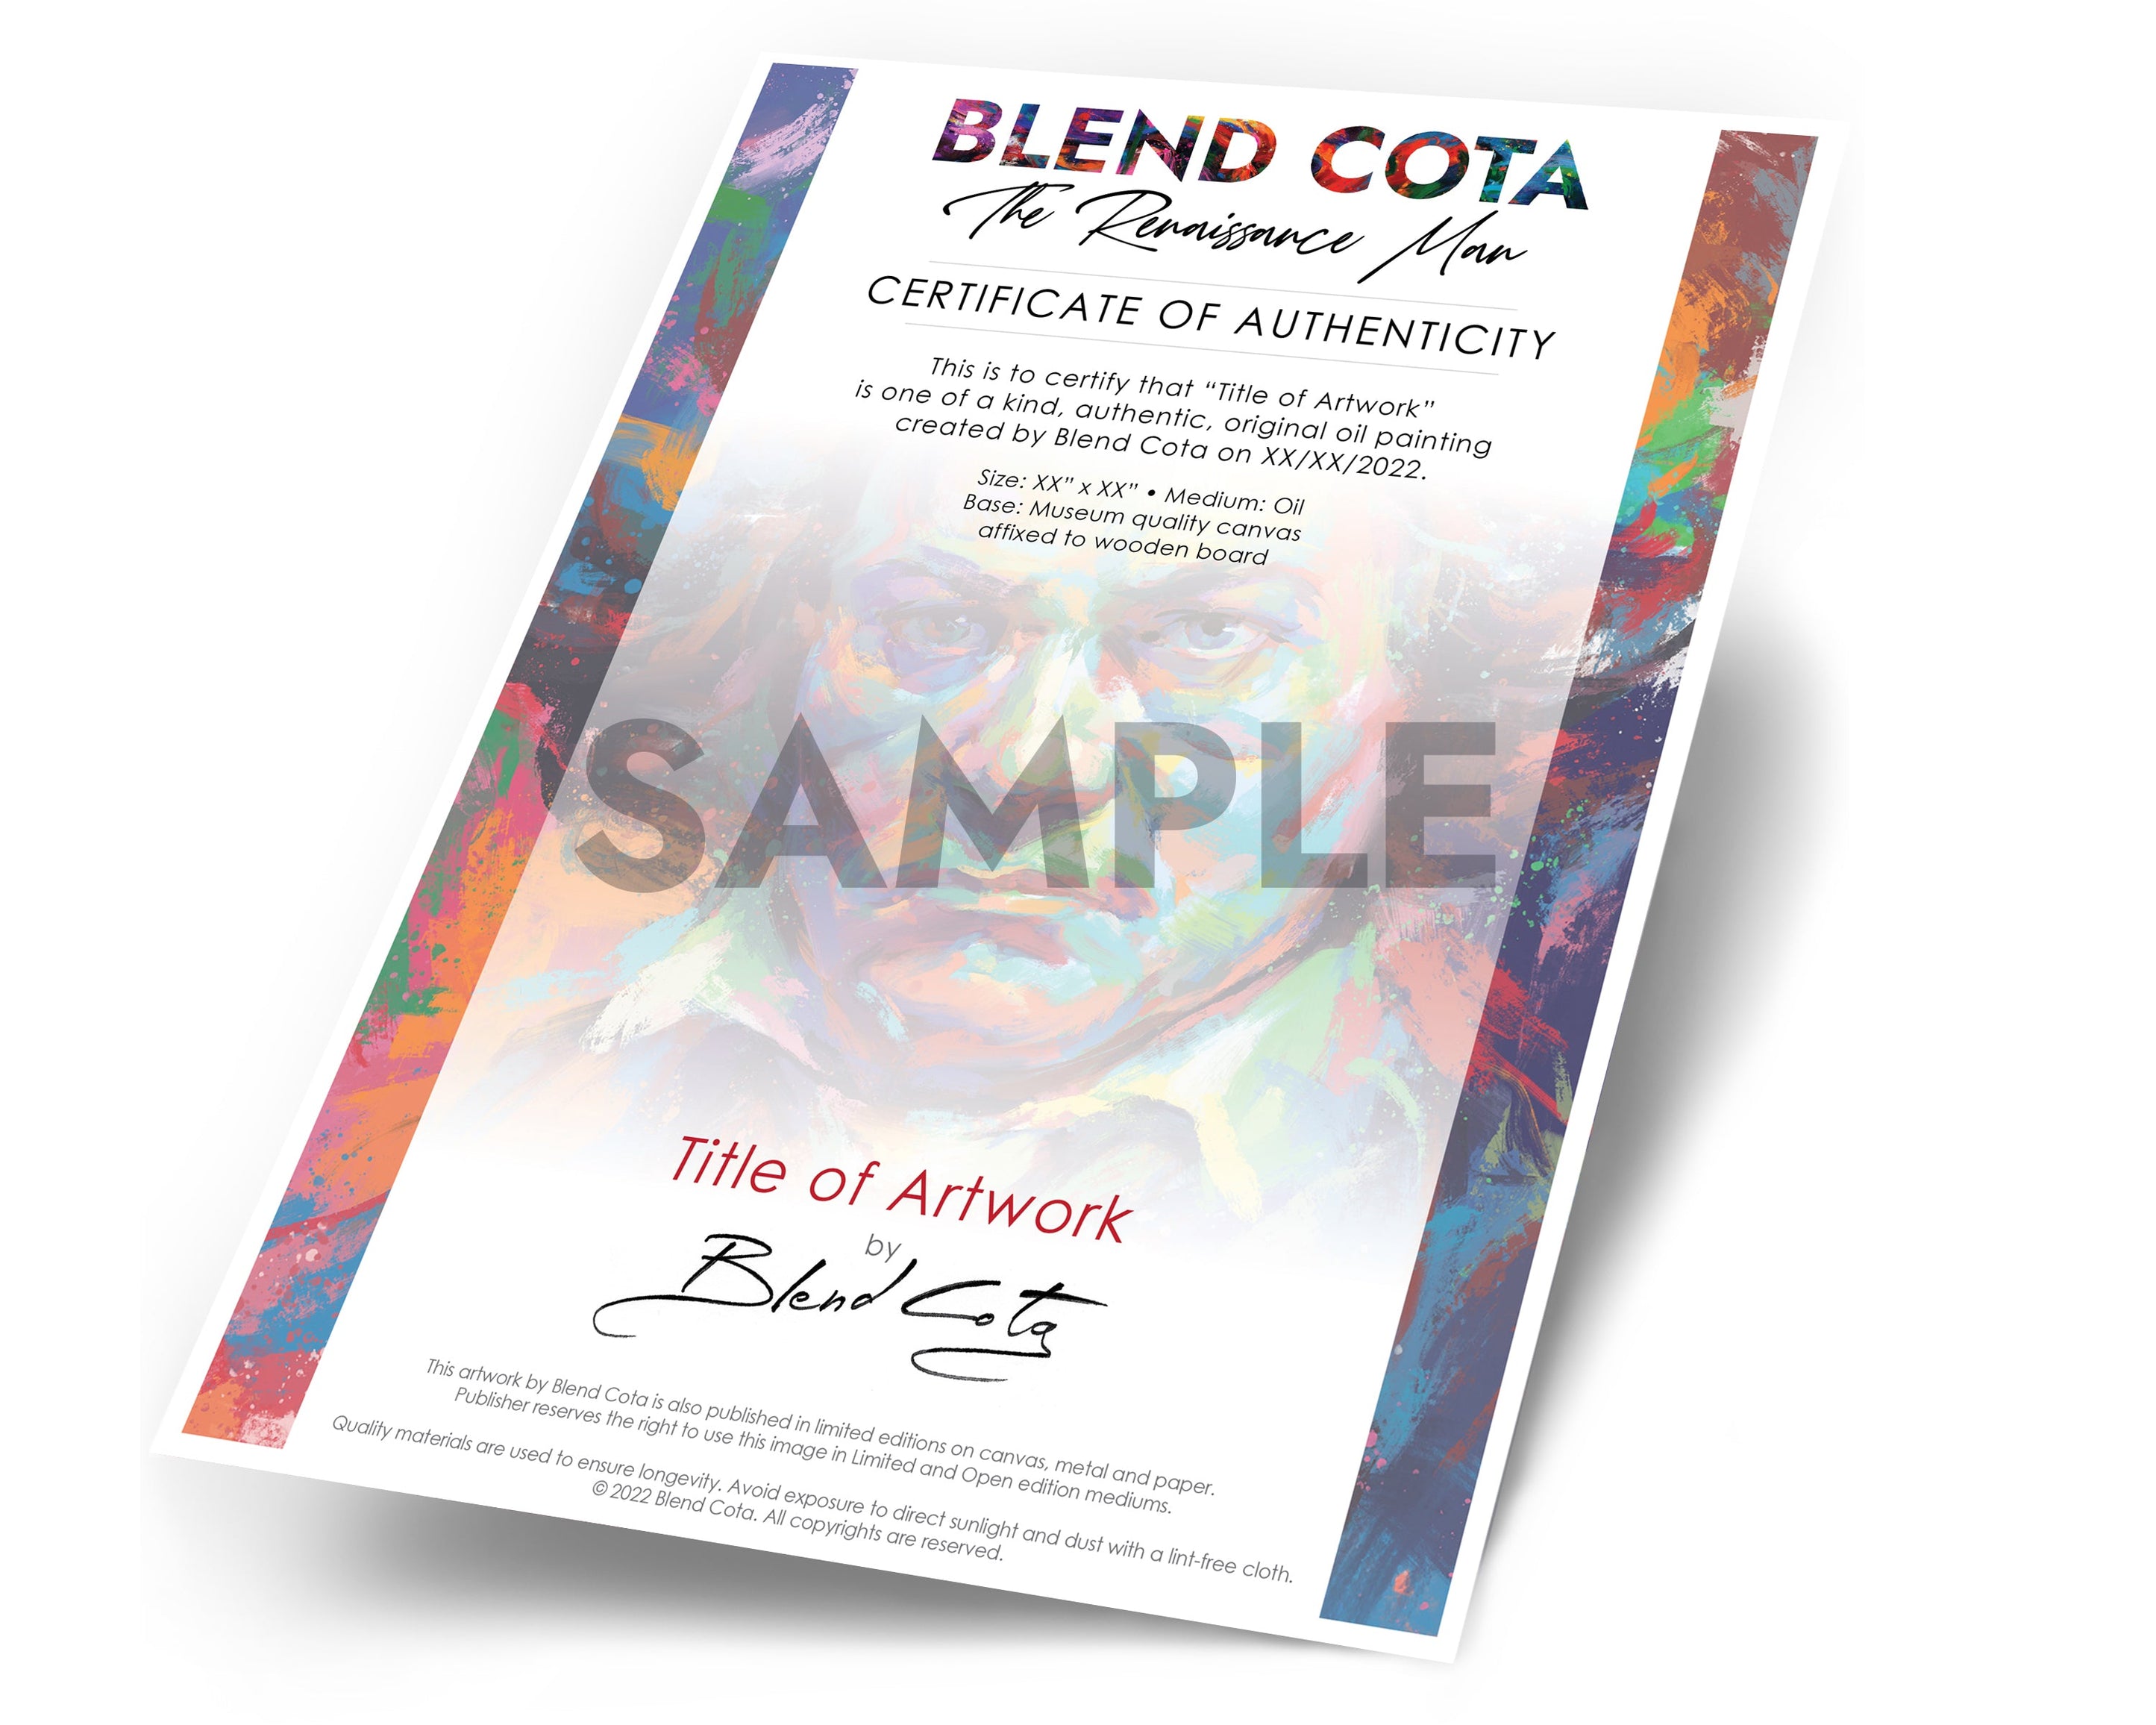 
                  
                    Blend Cota original oil painting certificate of authenticity
                  
                